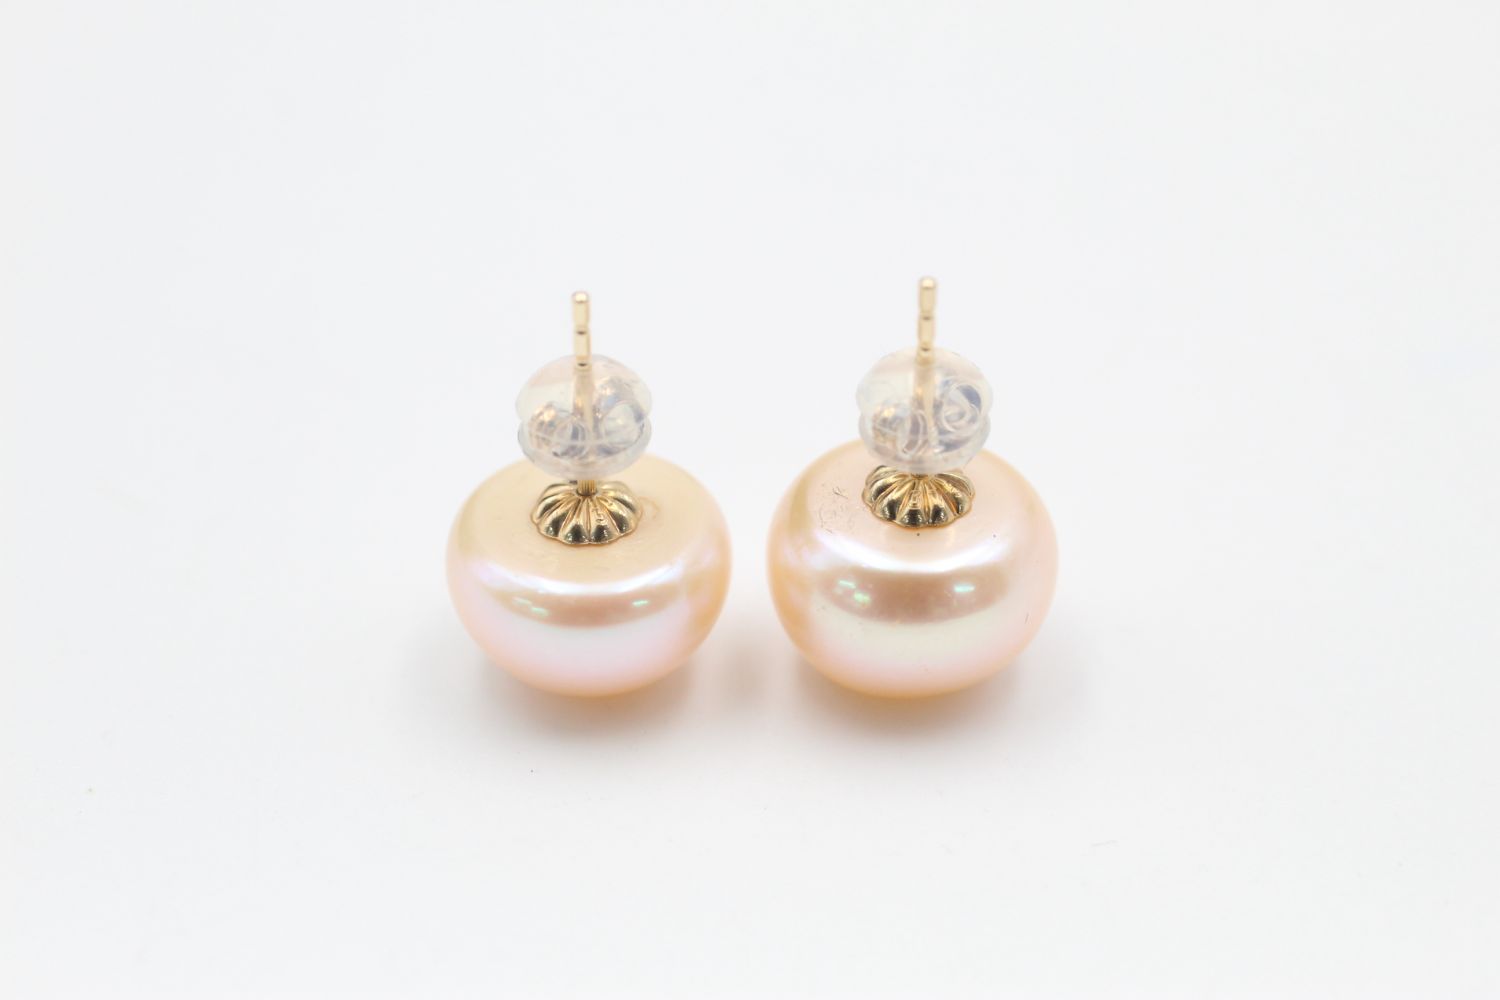 2 x 9ct Gold earrings inc. pearl, screw back 5.3 grams gross - Image 7 of 7